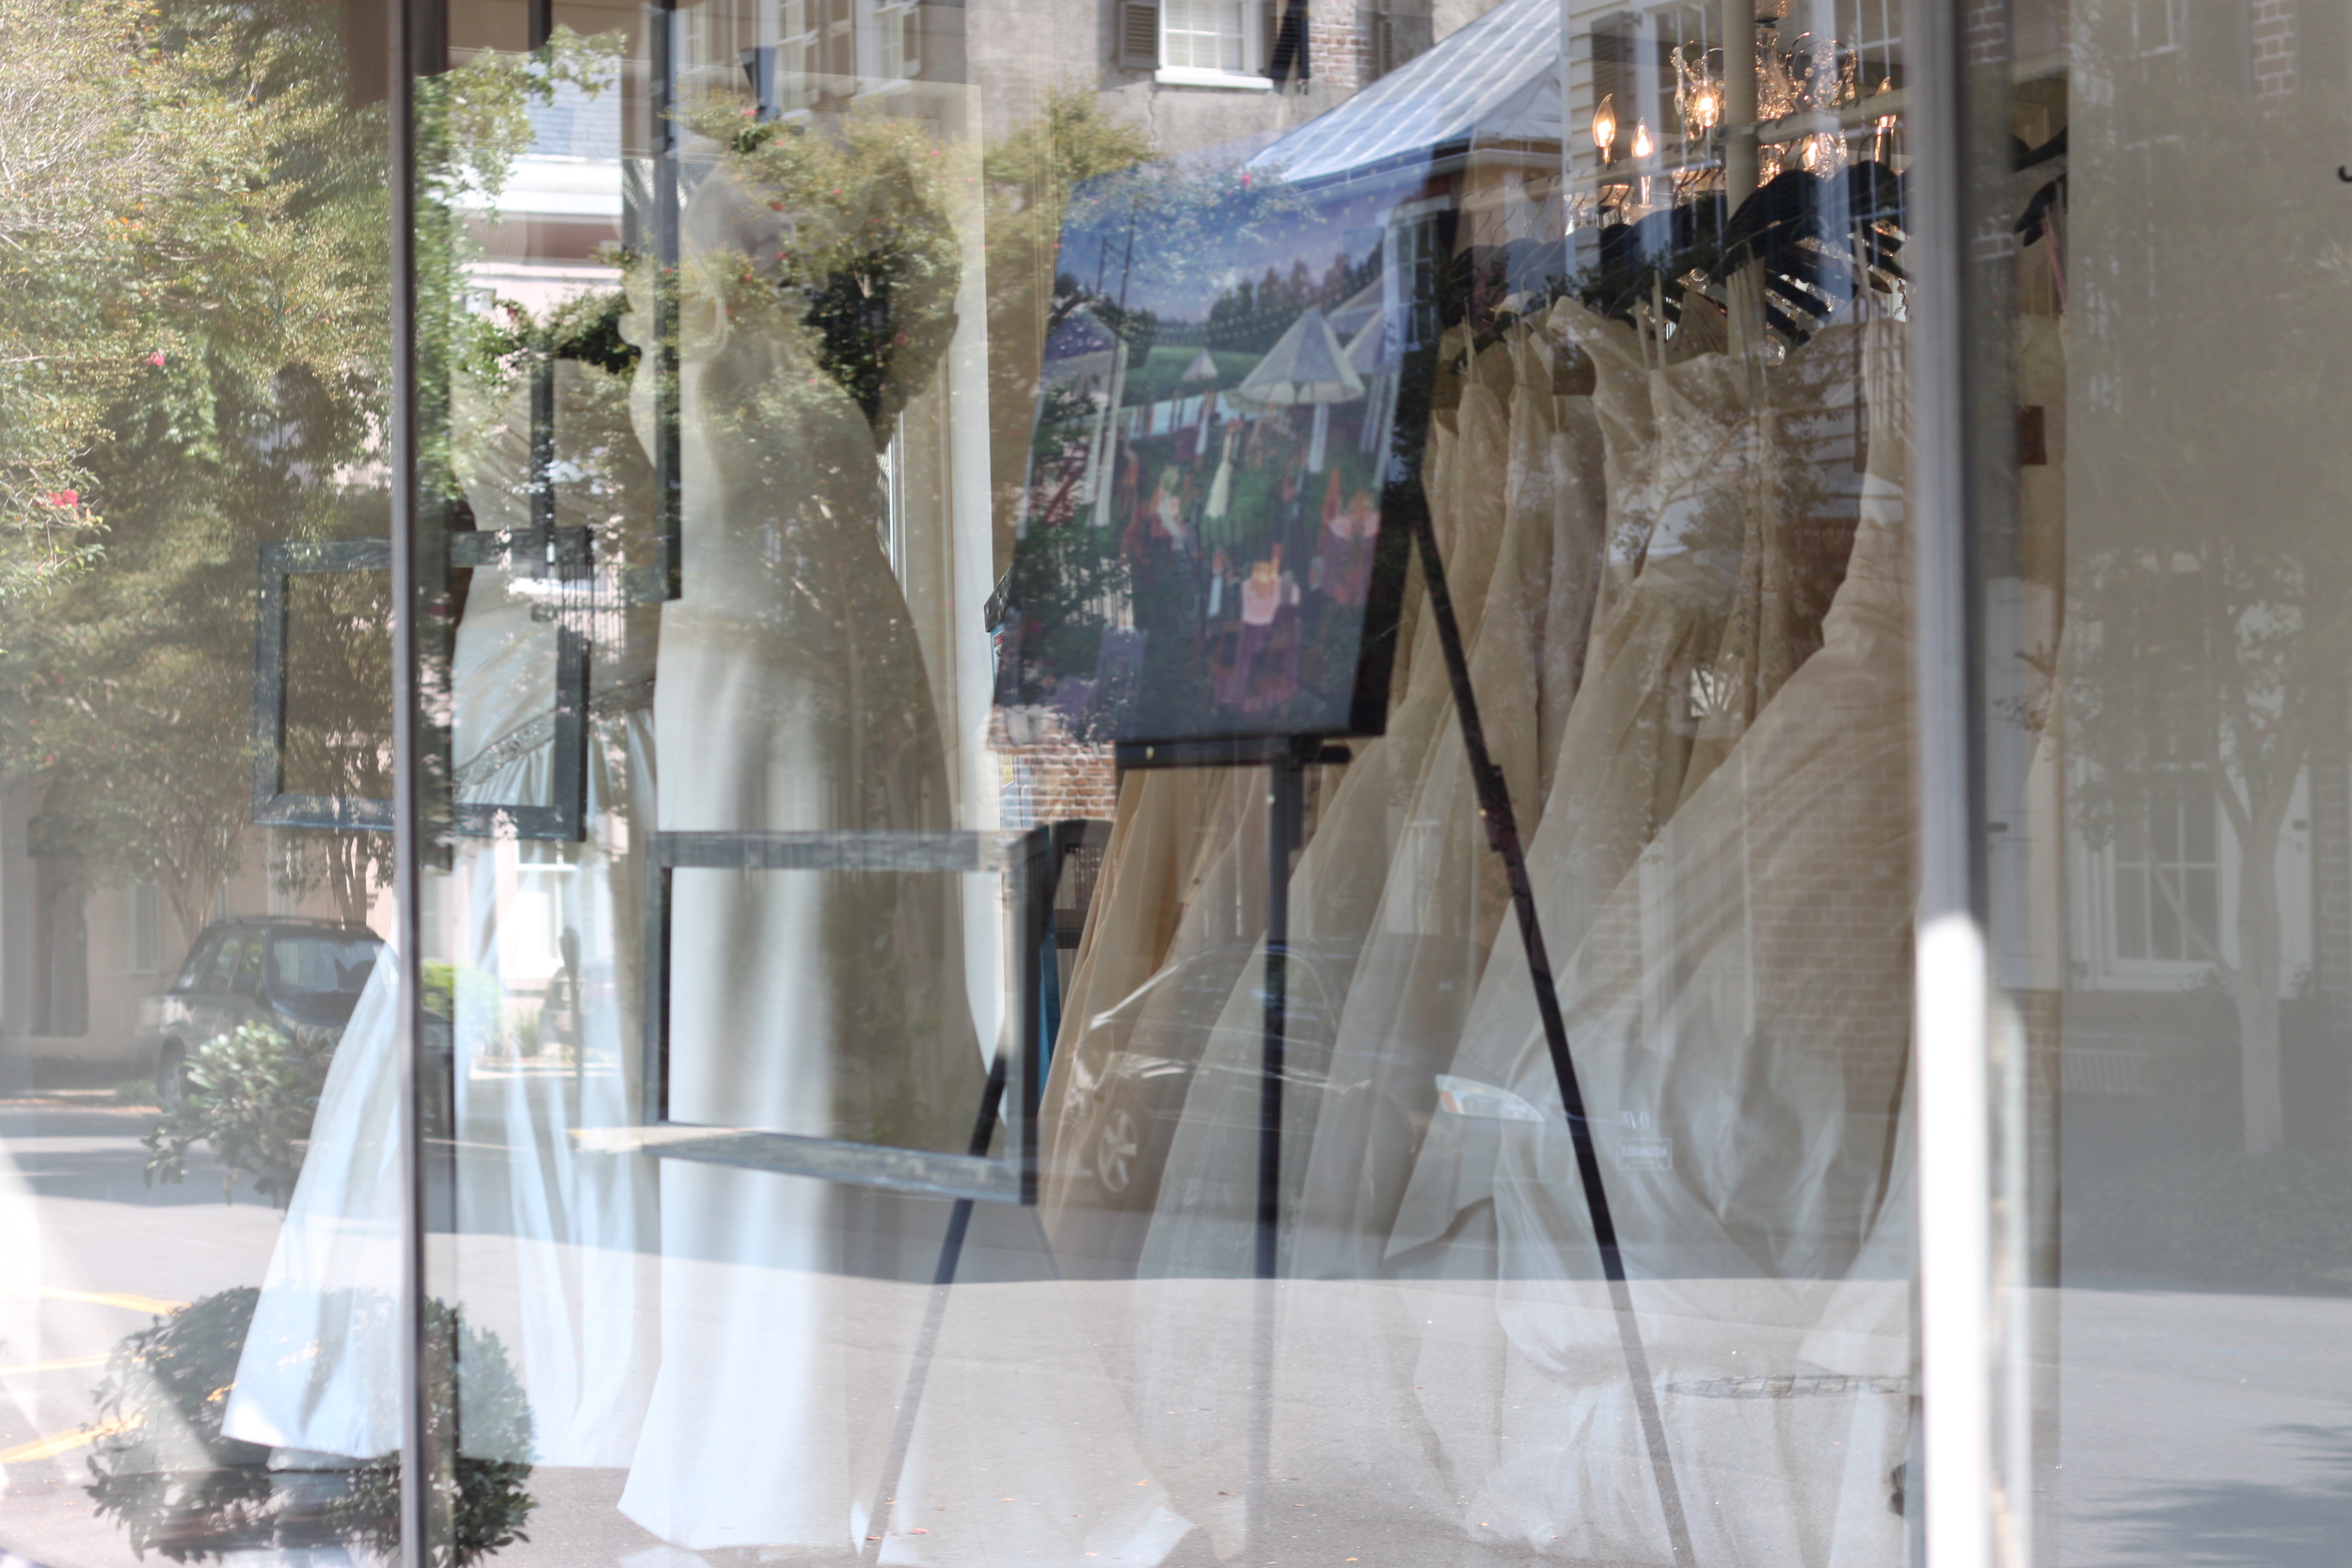 Fabulous Frocks + Wed on Canvas Window Display //